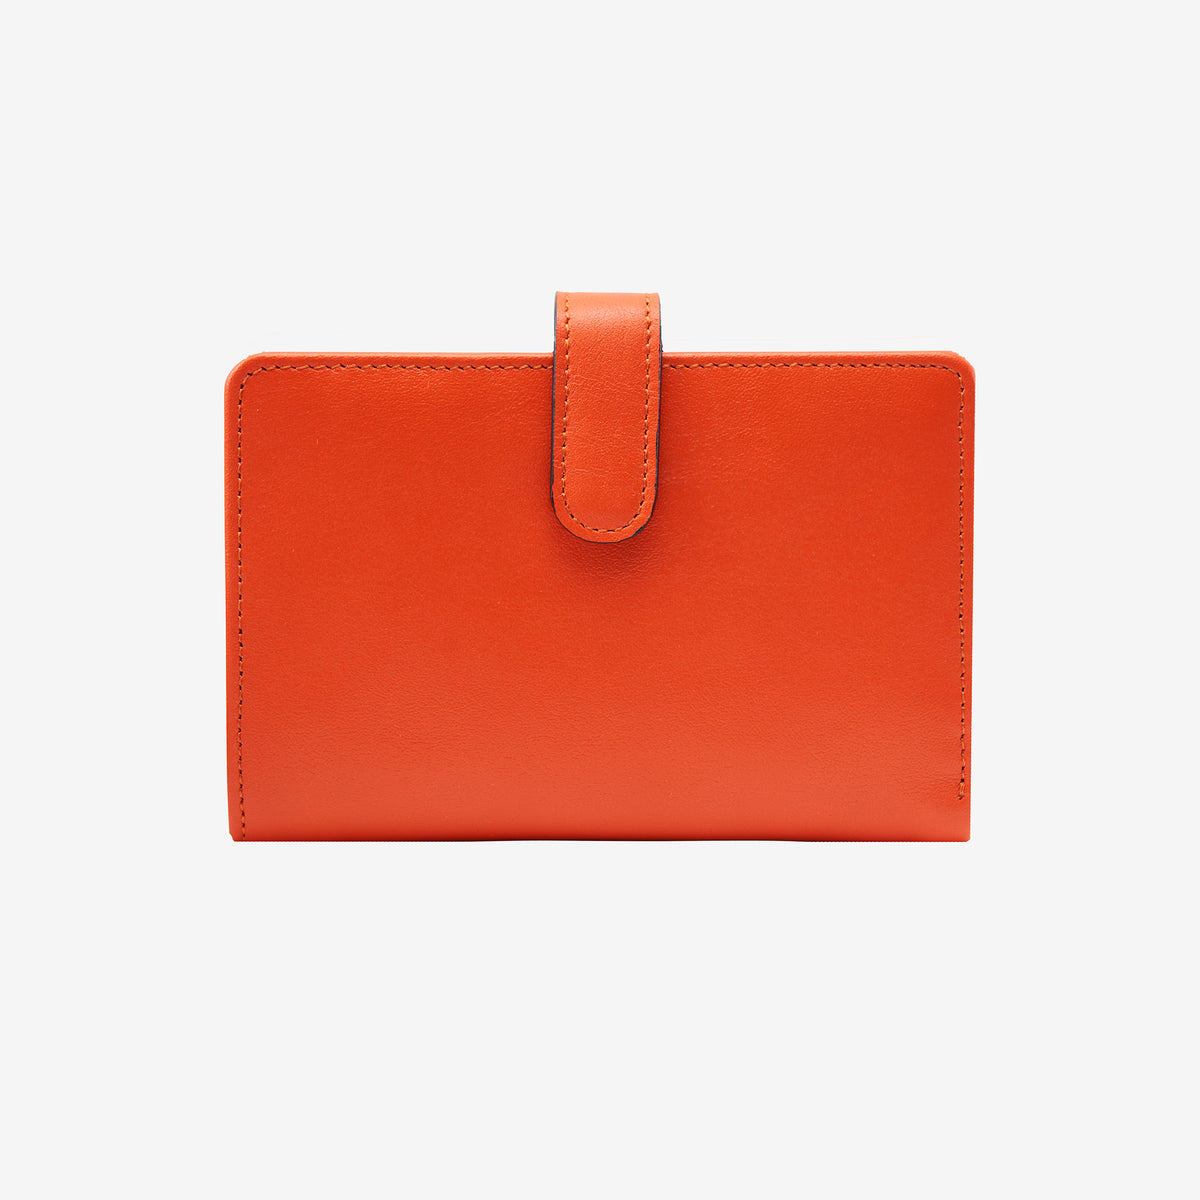 tusk 465 womens leather slim clutch wallet orange